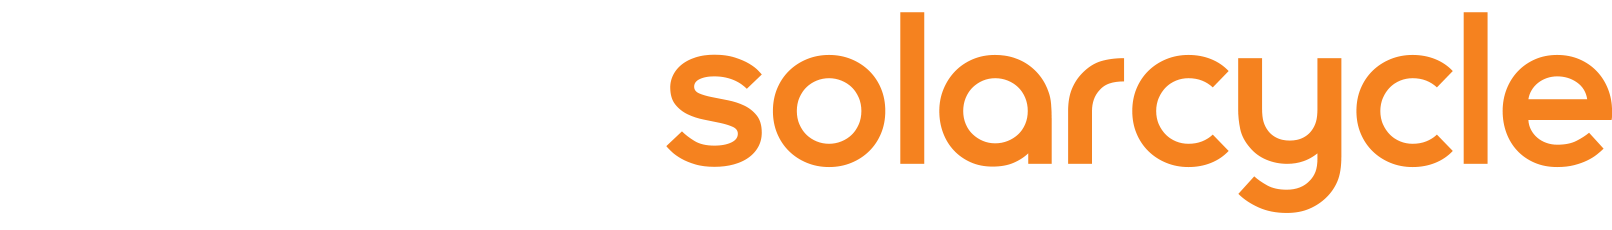 Dyson Solarcycle Logo